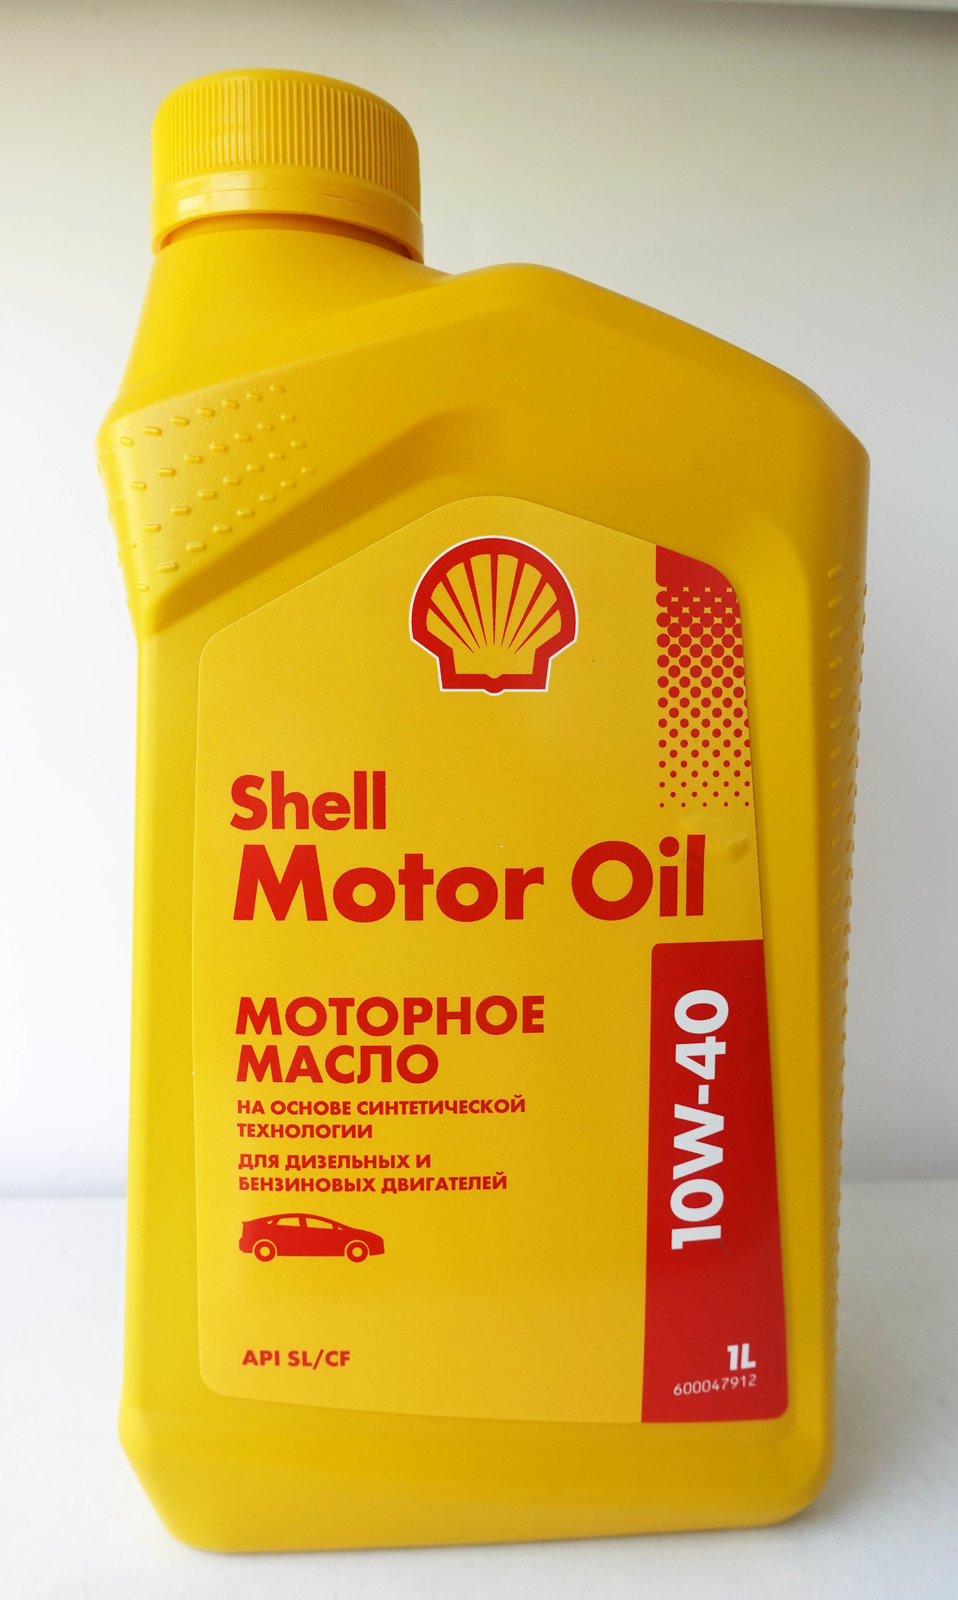 shell-motor-oil-10w-40-api-sl-cf-shell-oil-club-ru